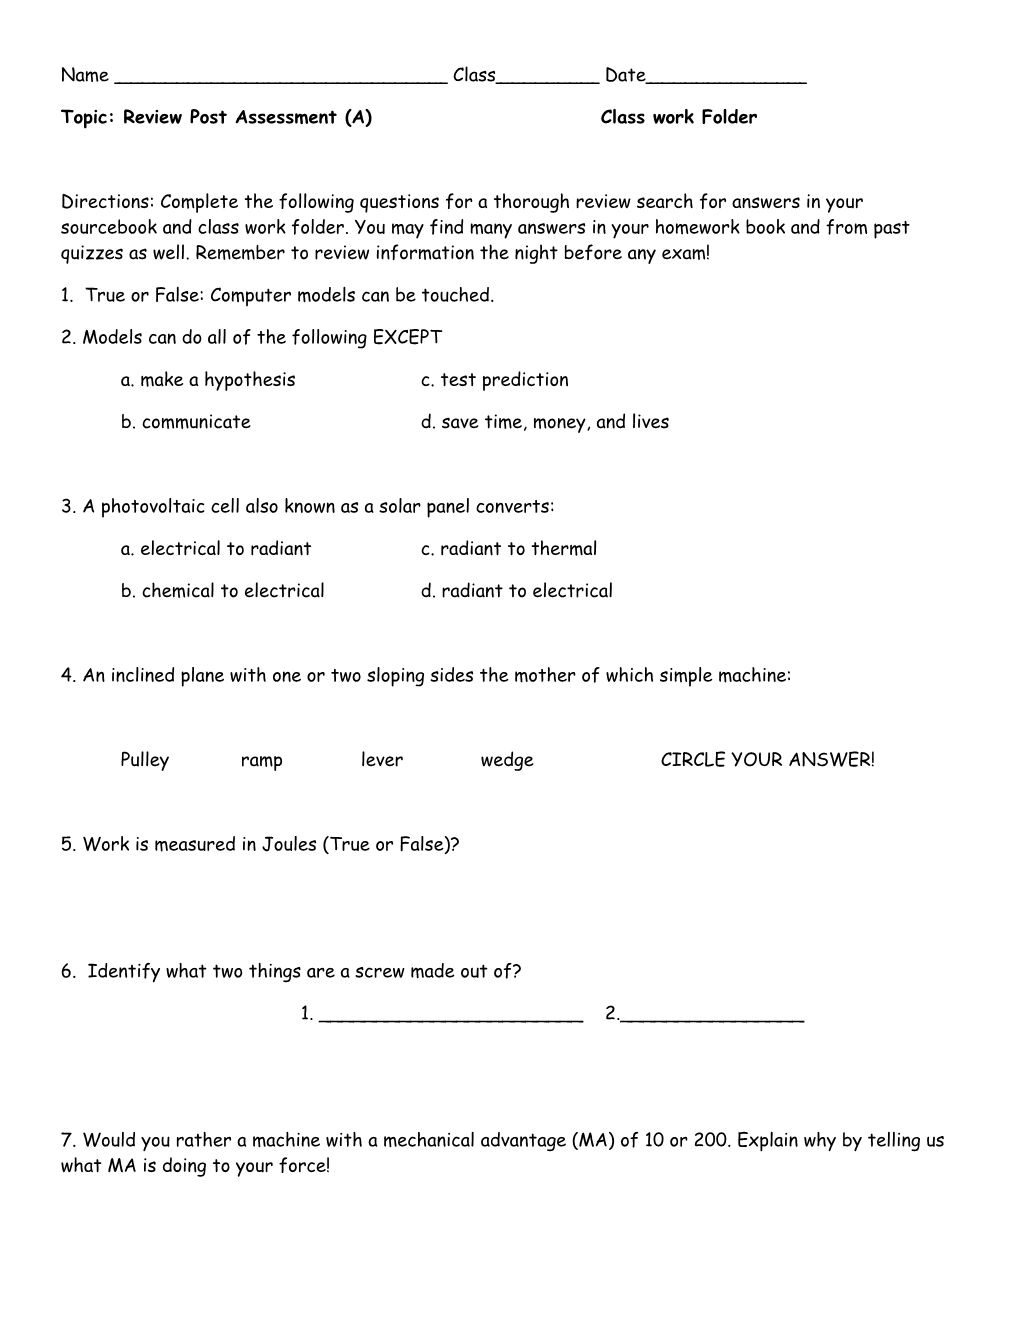 Topic: Review Post Assessment(A) Class Work Folder